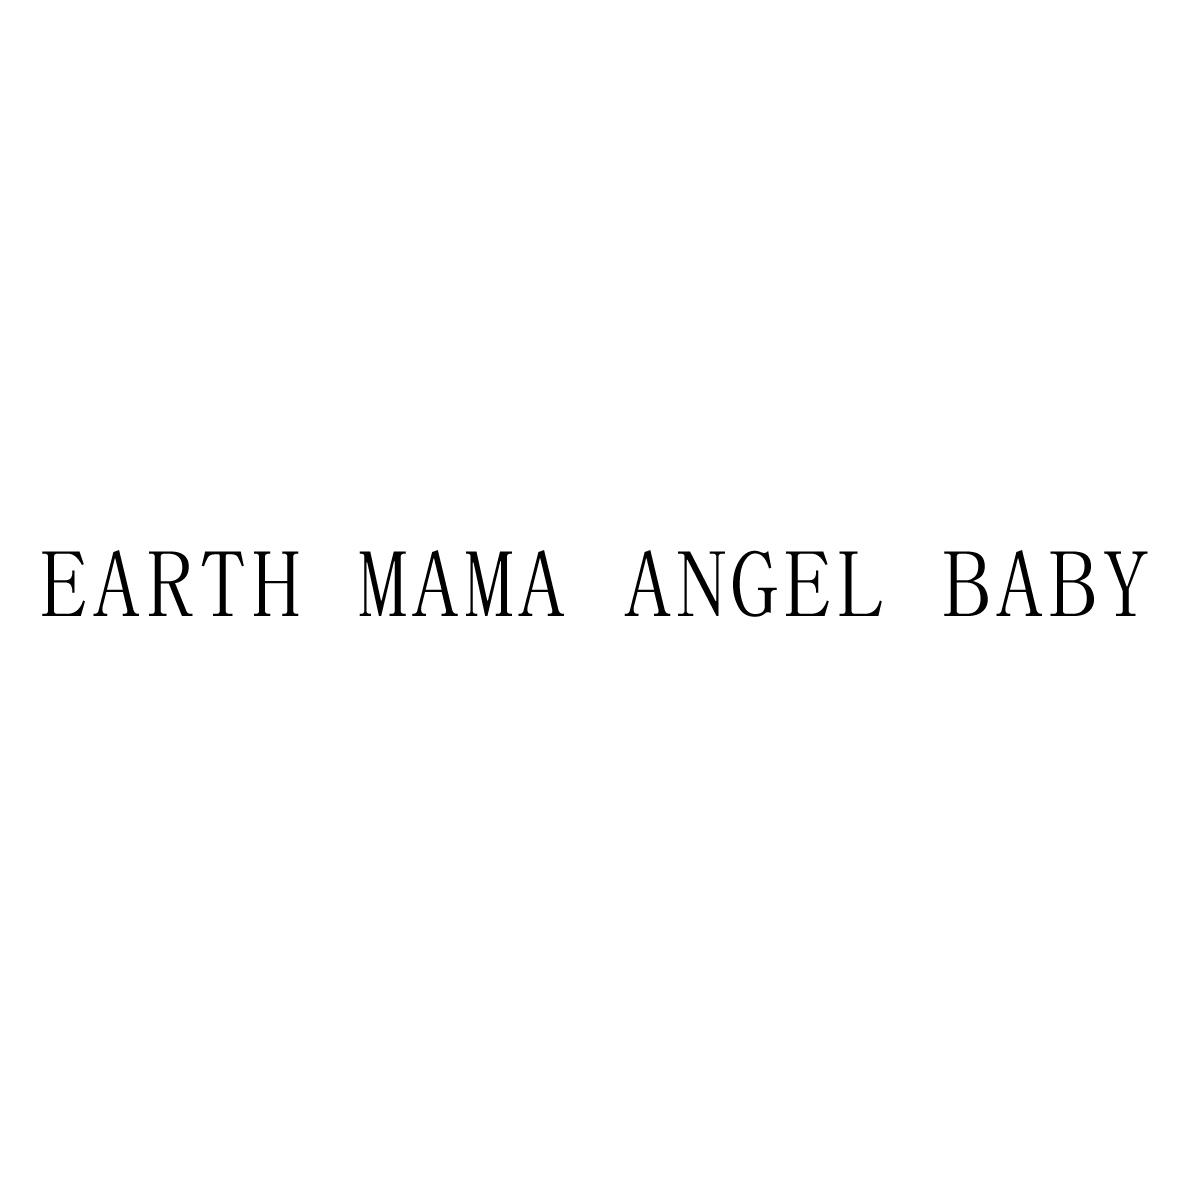 EARTH MAMA ANGEL BABY